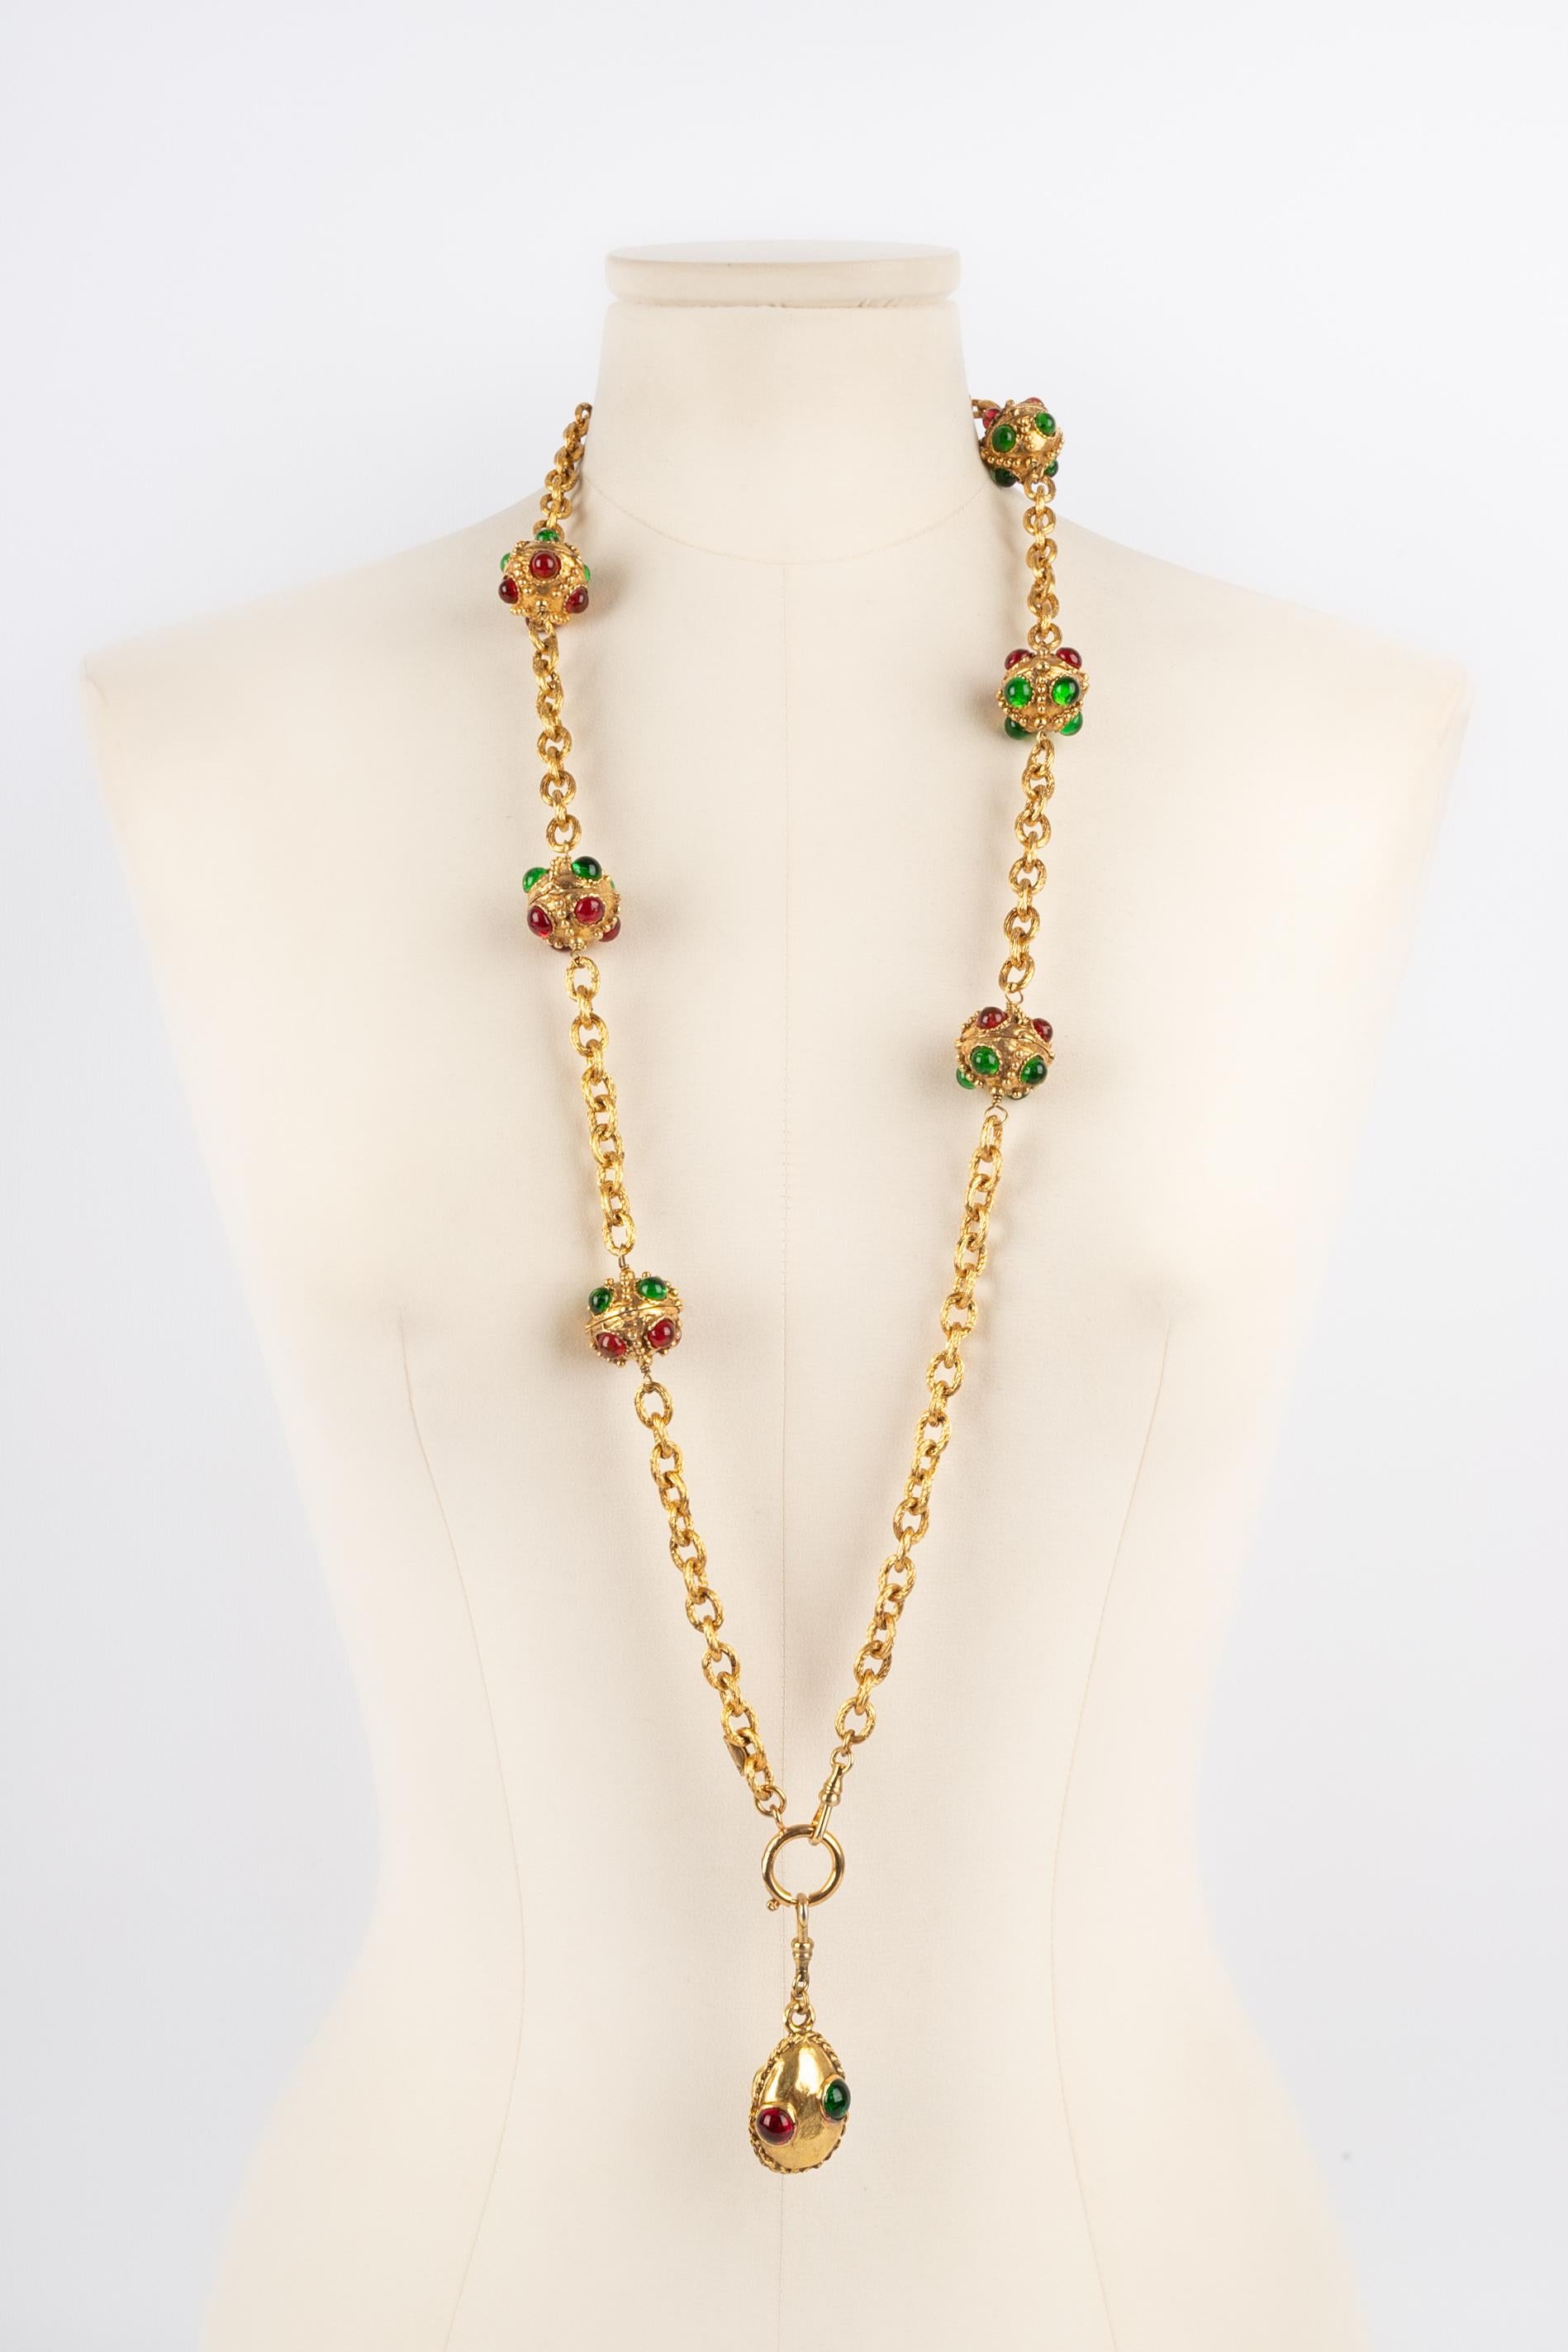 Chanel Byzantine necklace 6